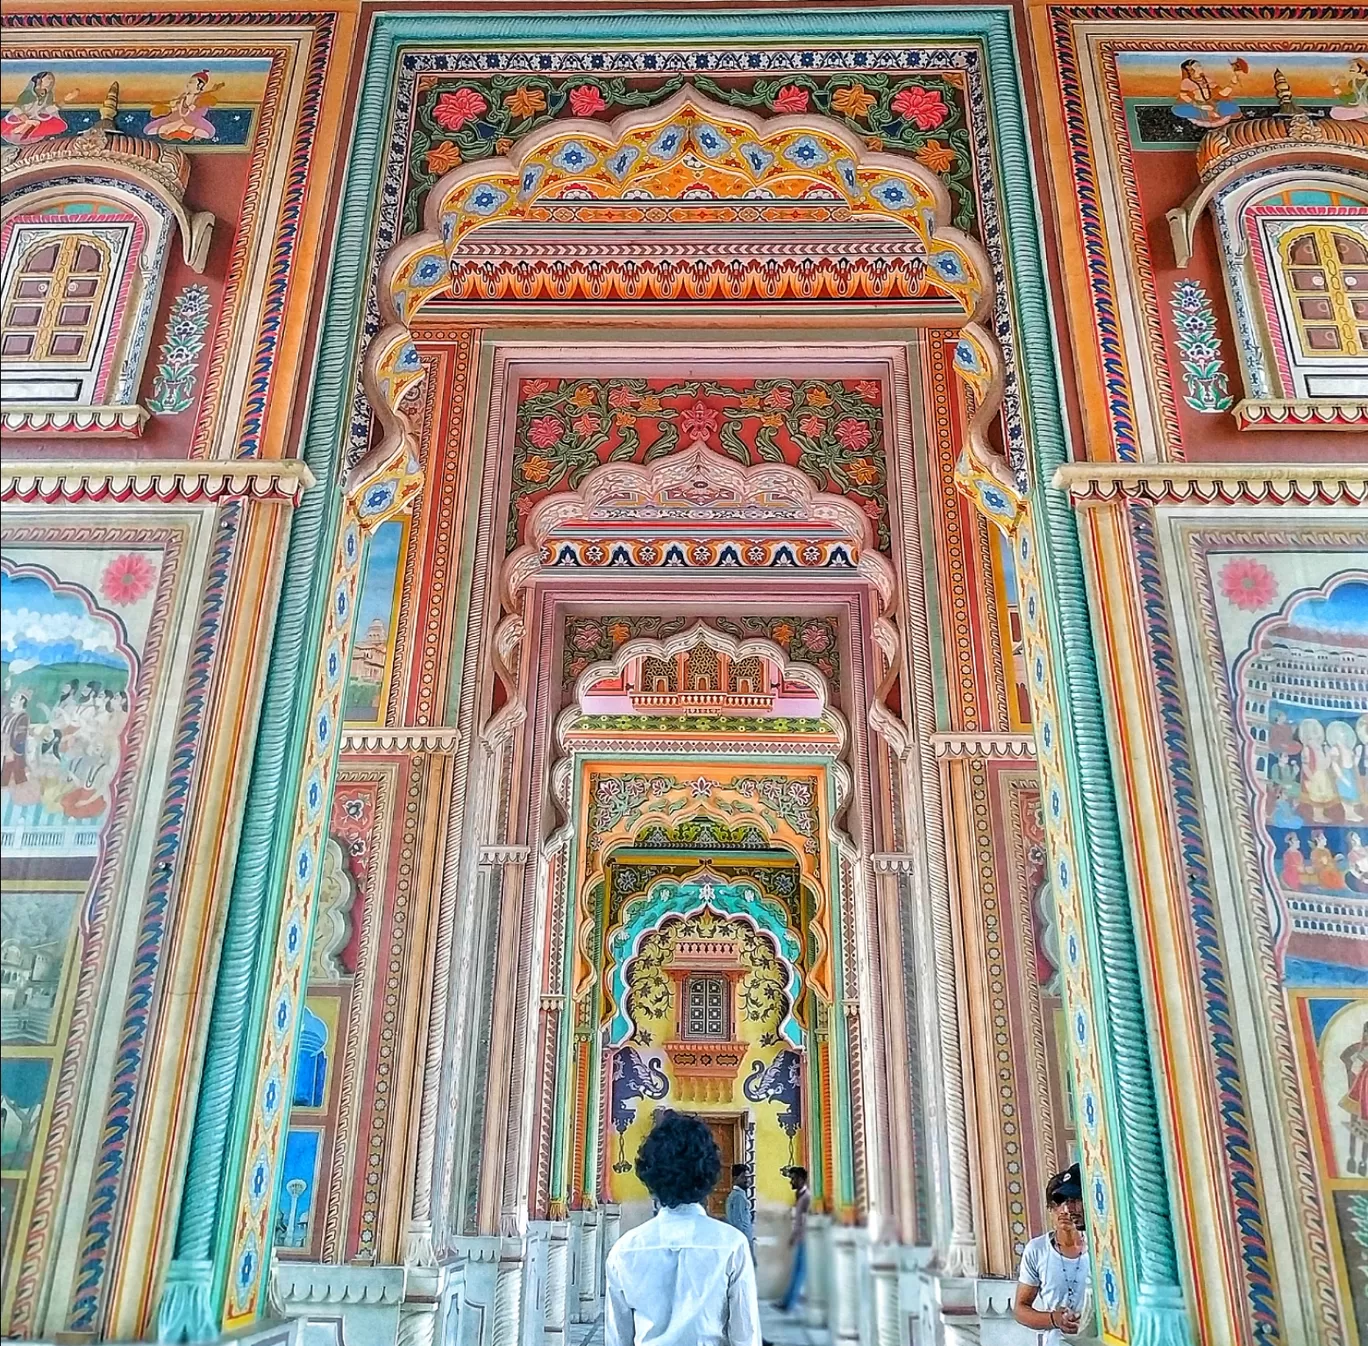 Photo of Jaipur By Devendraghunawatyoga